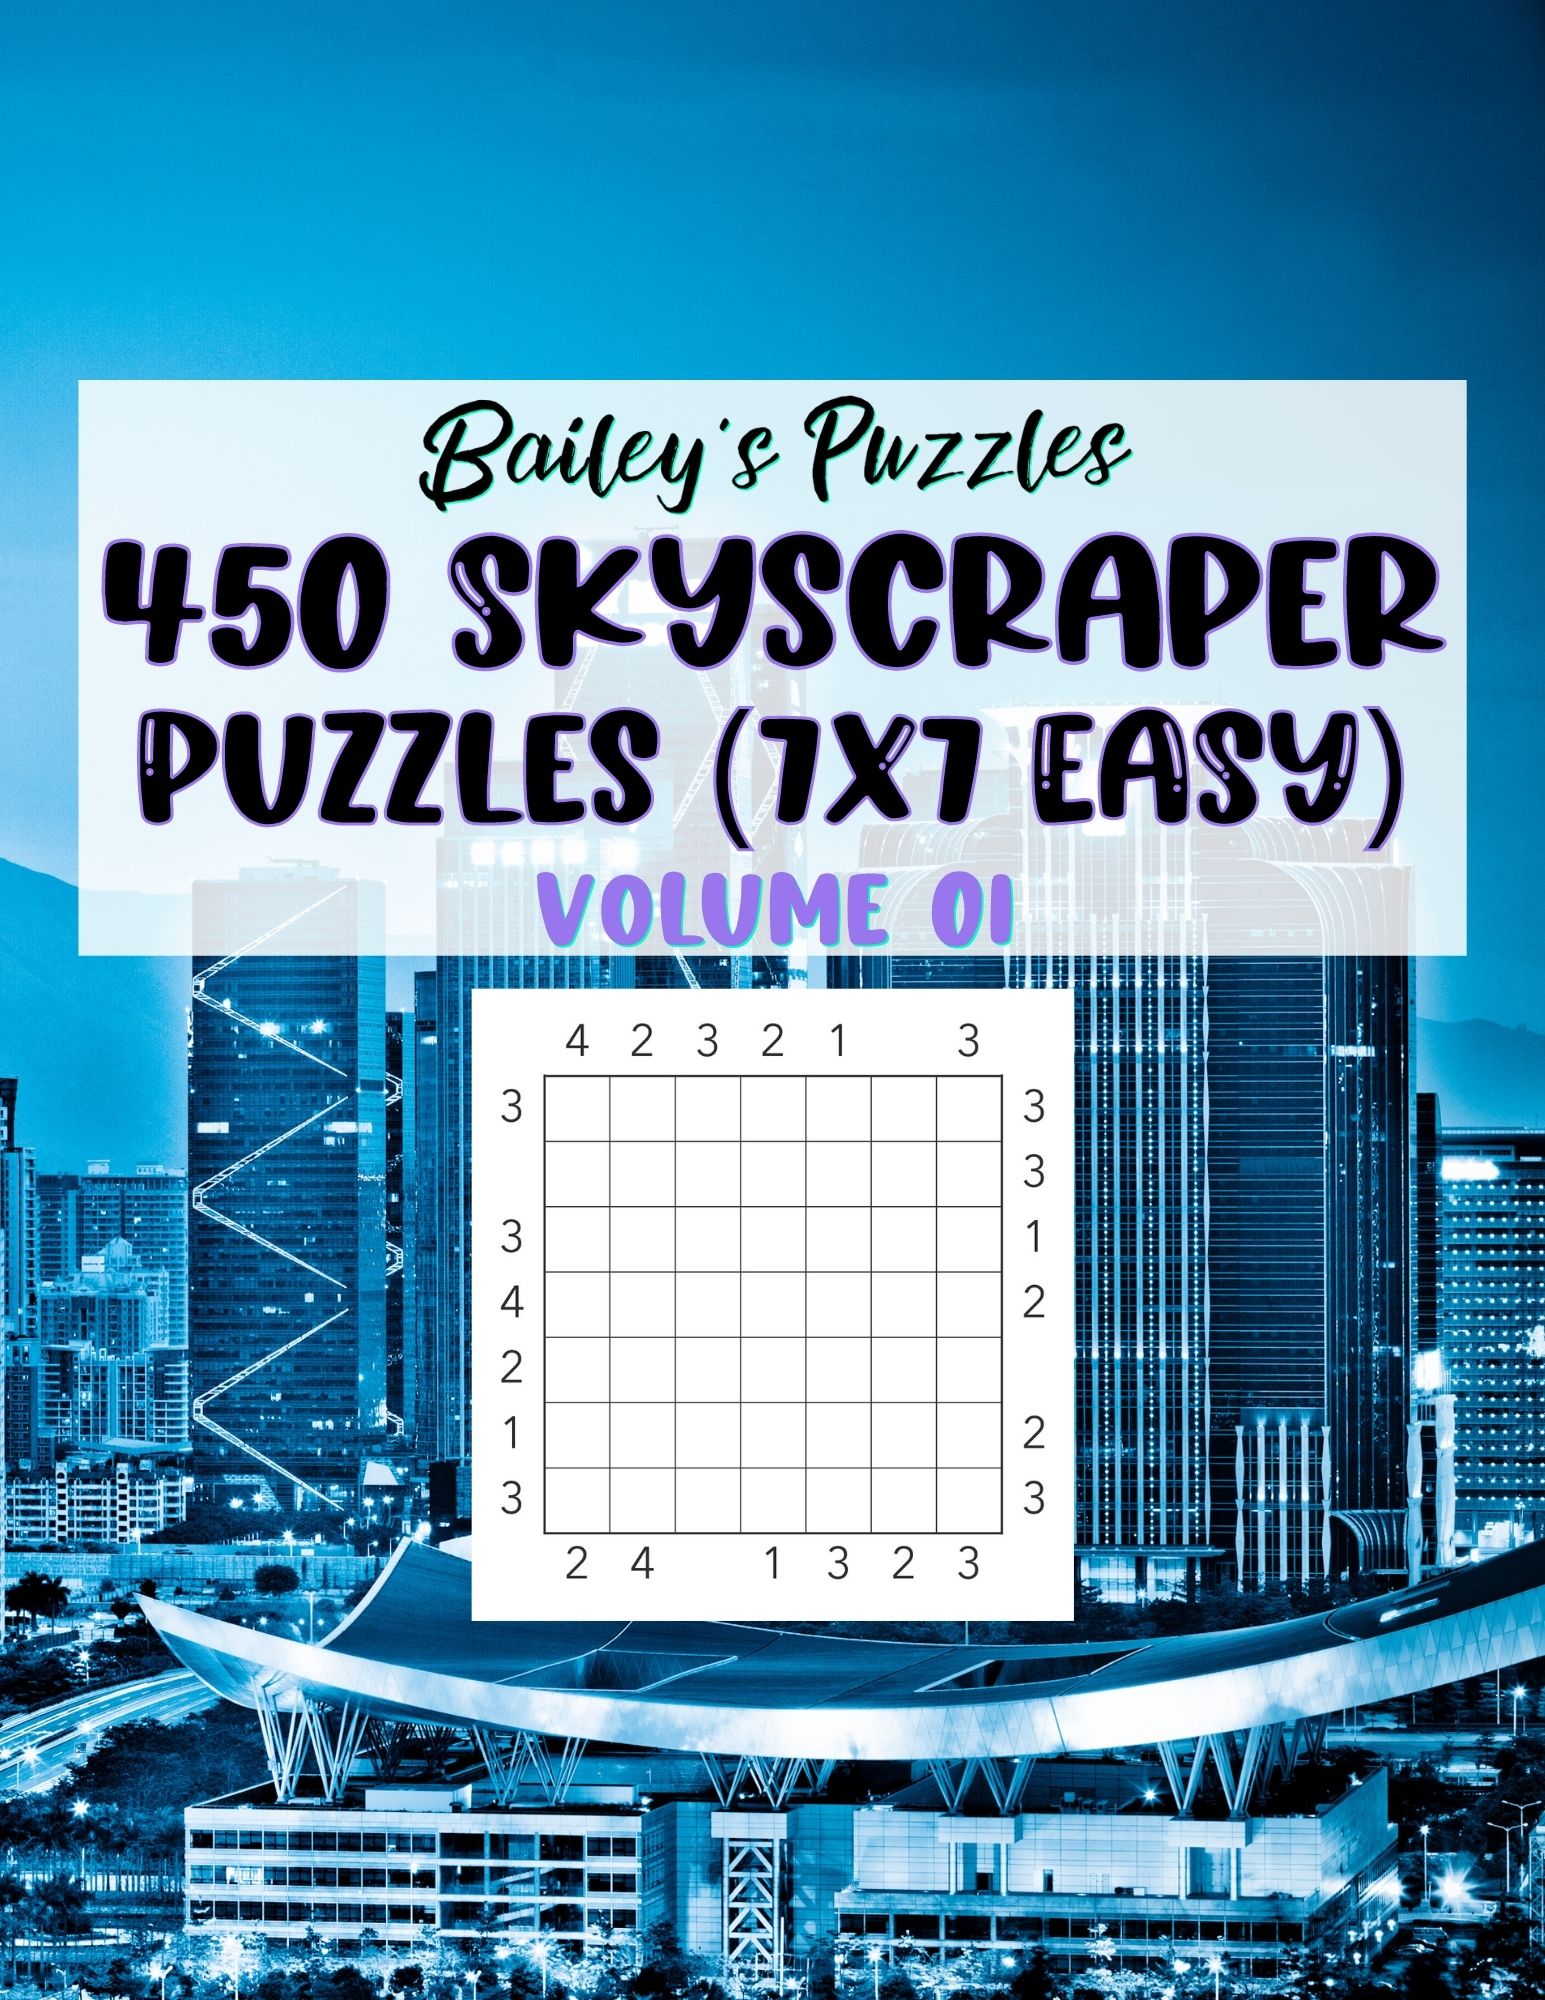 Front Cover - 450 Skyscraper Puzzles (7x7, easy)